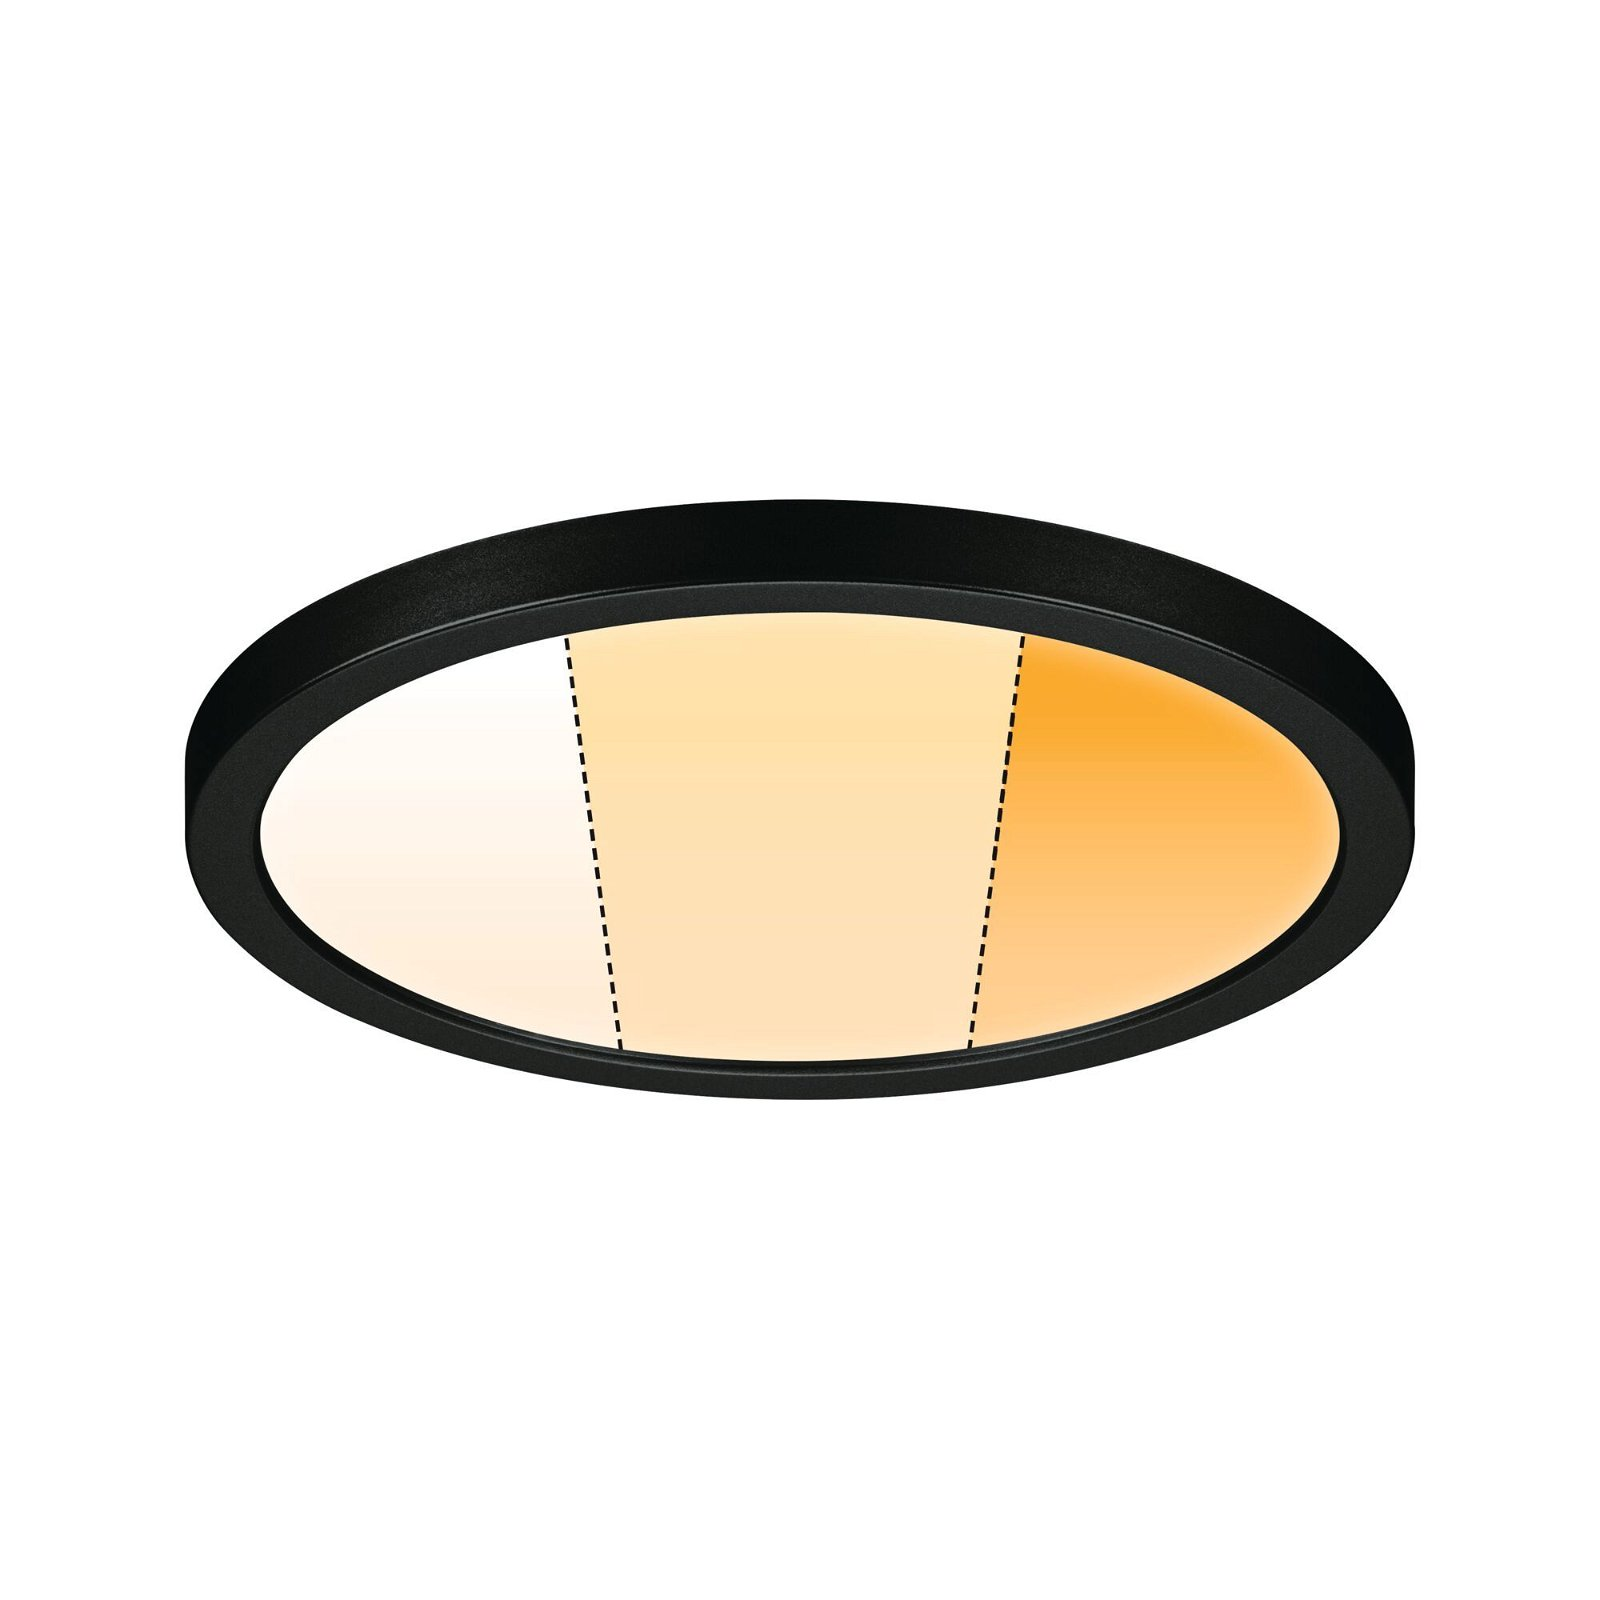 Dim 3 to Step warm LICHT LED VariFit PAULMANN Panel (93099)